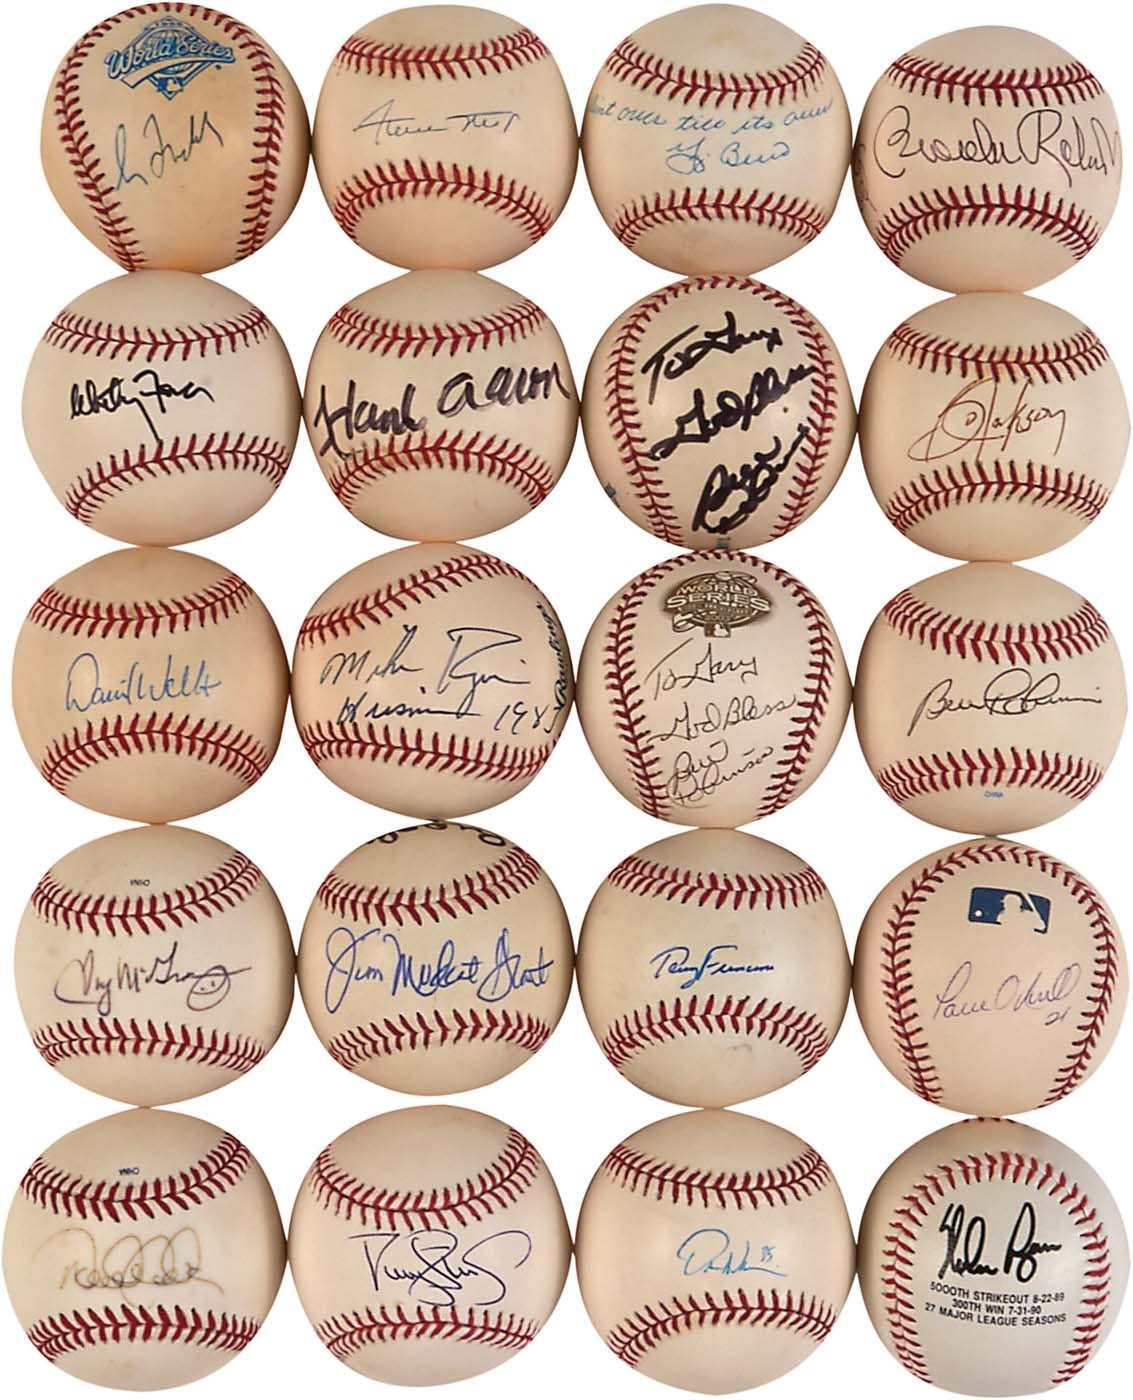 Baseball Autographs - Baseball Legends and Stars Signed Baseballs & Bats w/Derek Jeter (25)